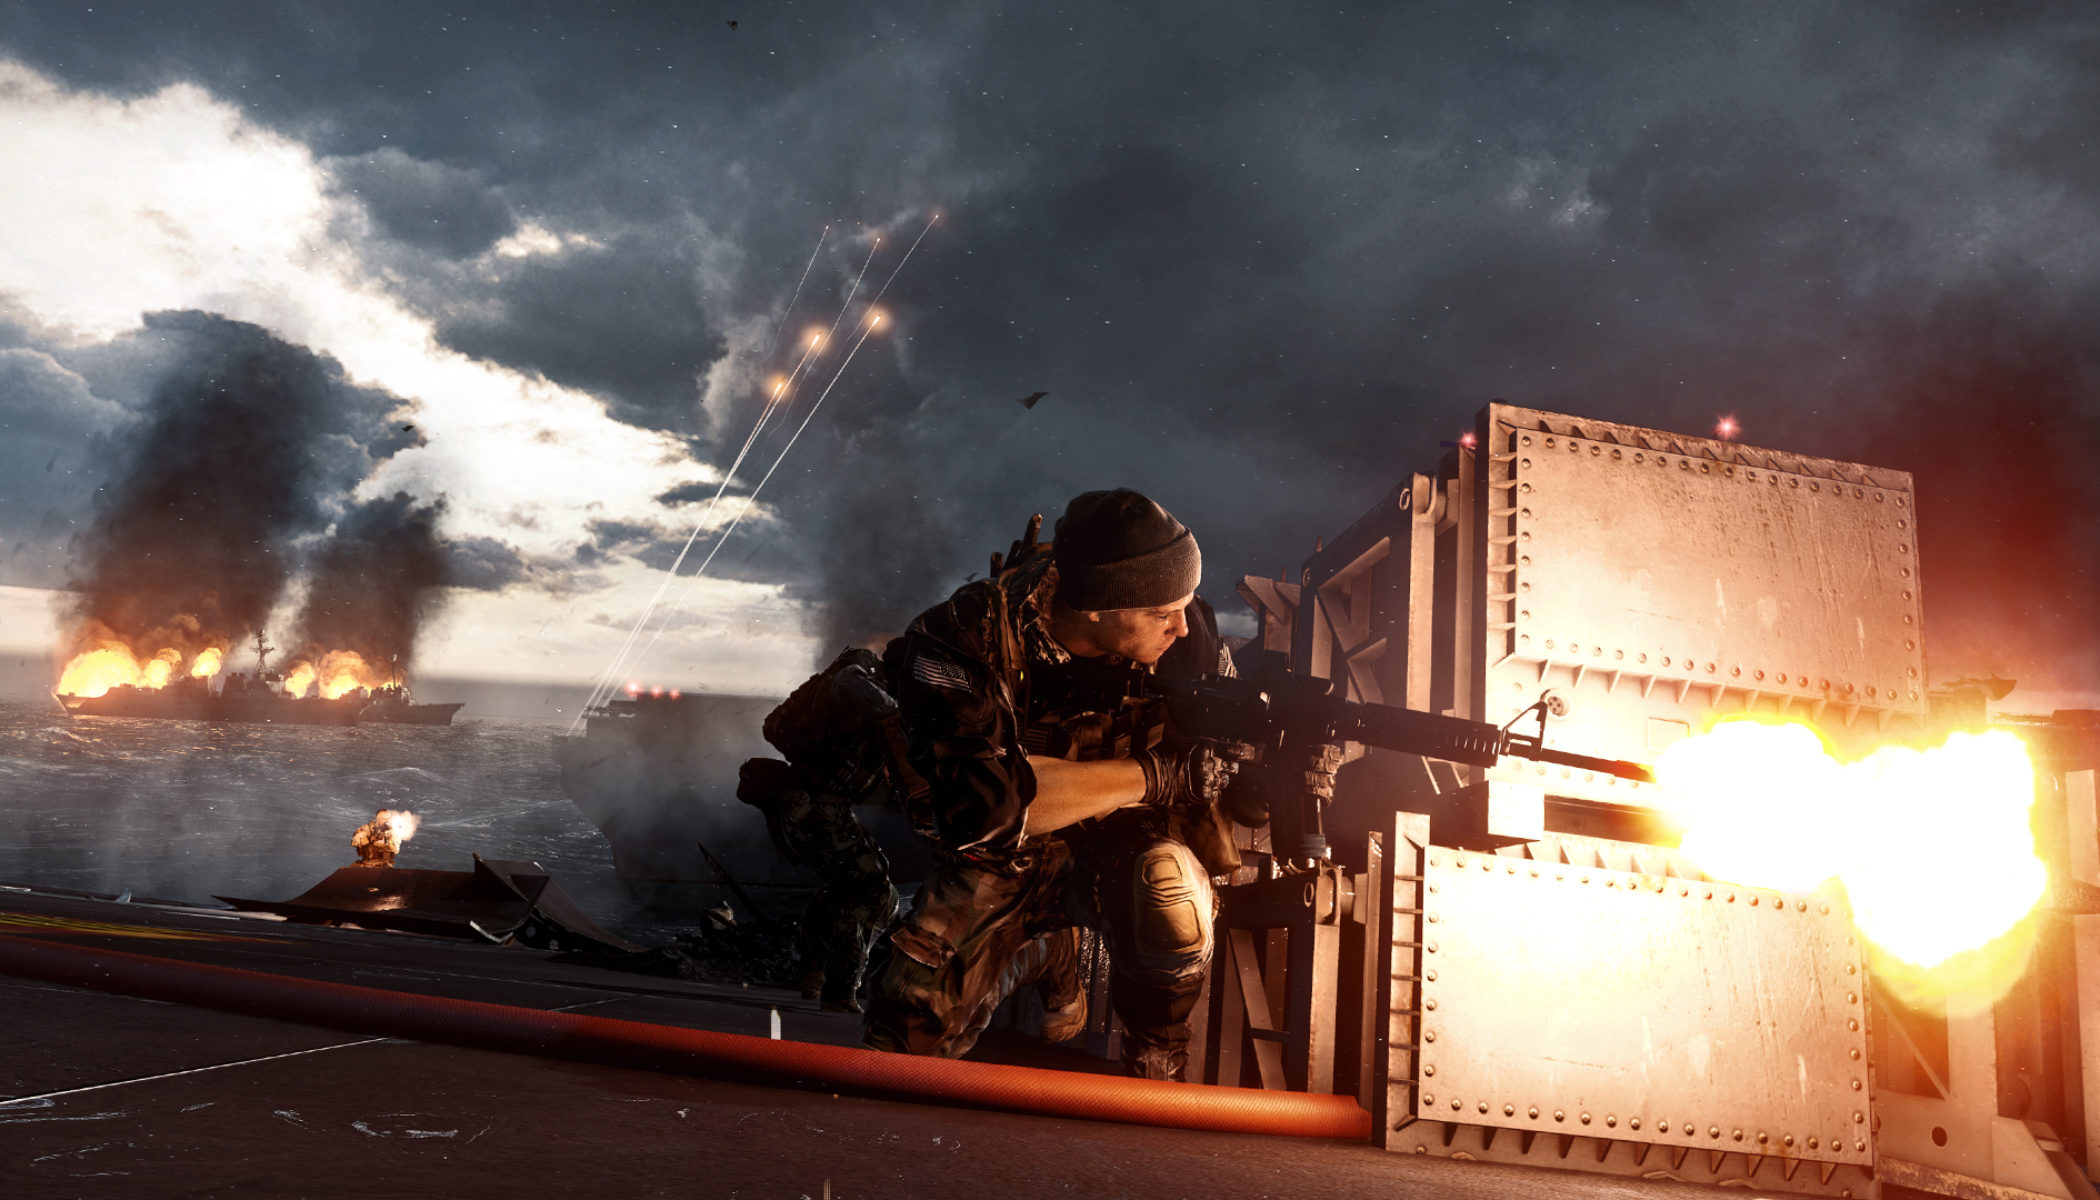 Battlefield 4 Battlelog trailer revealed